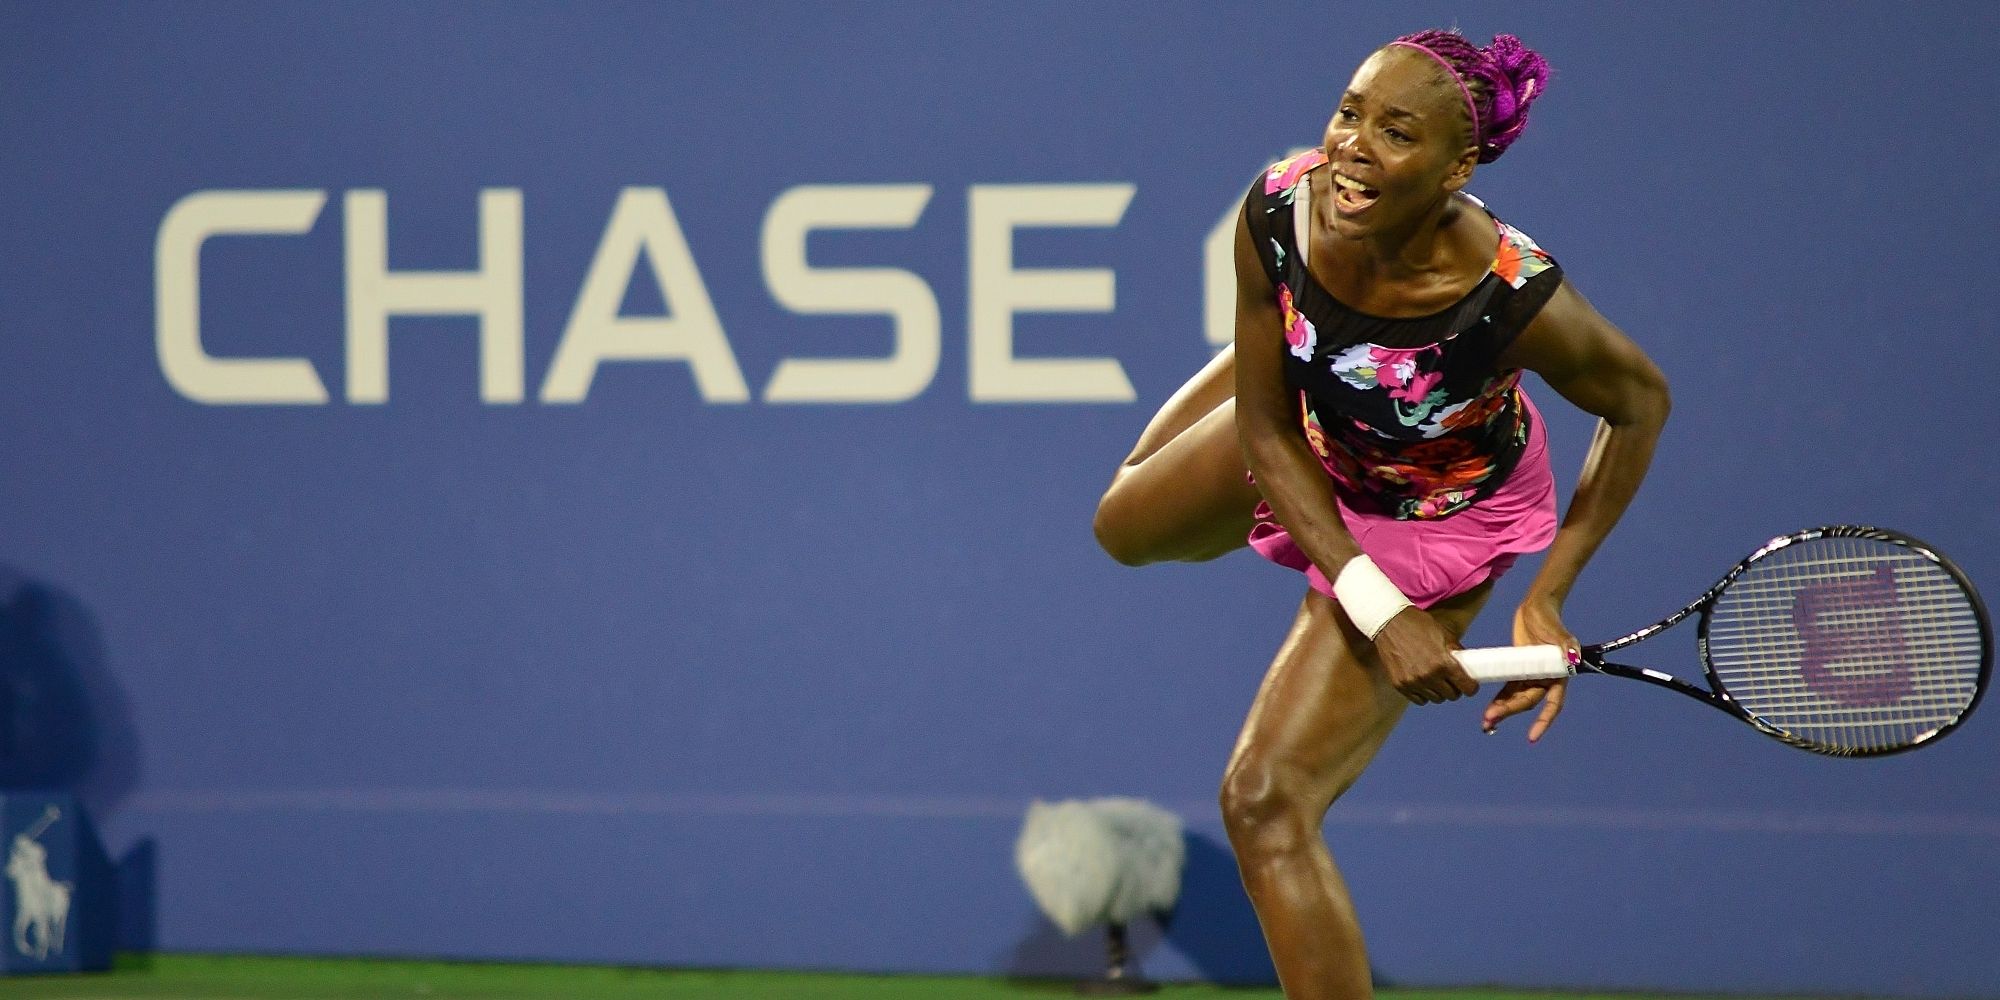 King Richard: Serena & Venus Williams' Real-Life Tennis Stats, Championships, Records & Career History Explained